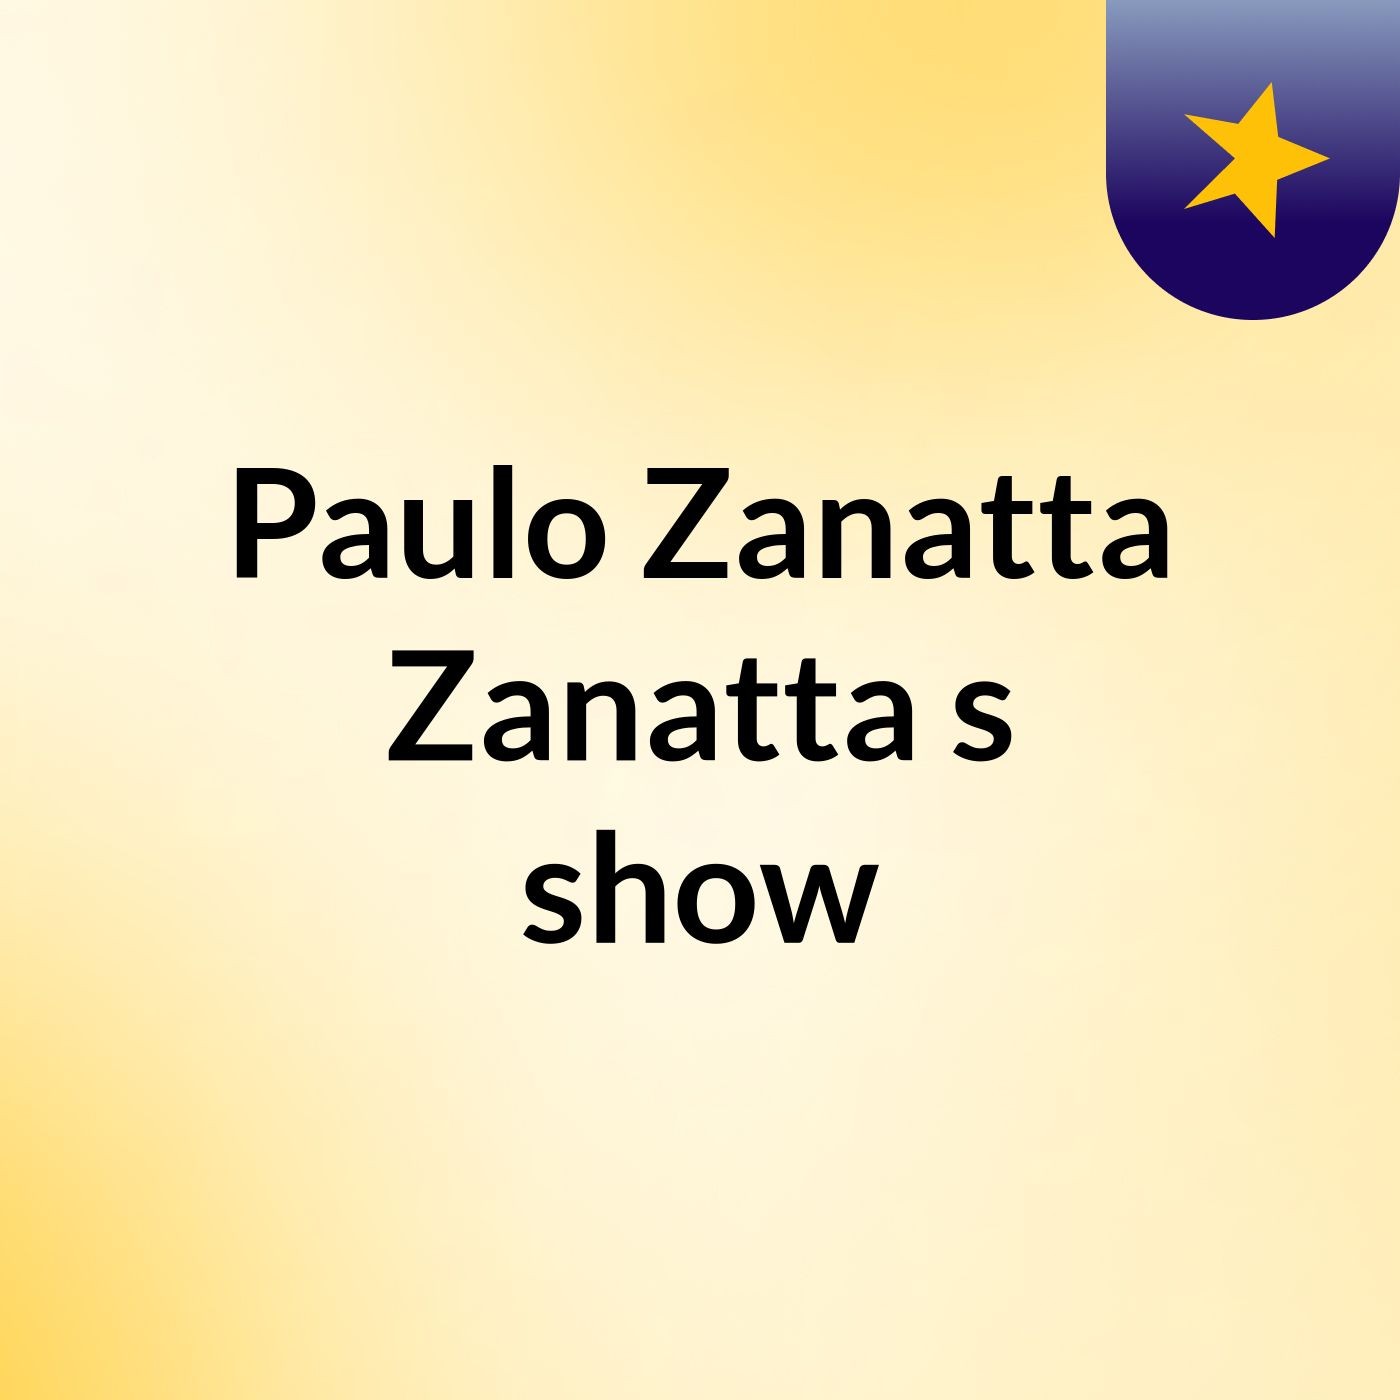 Paulo Zanatta Zanatta's show